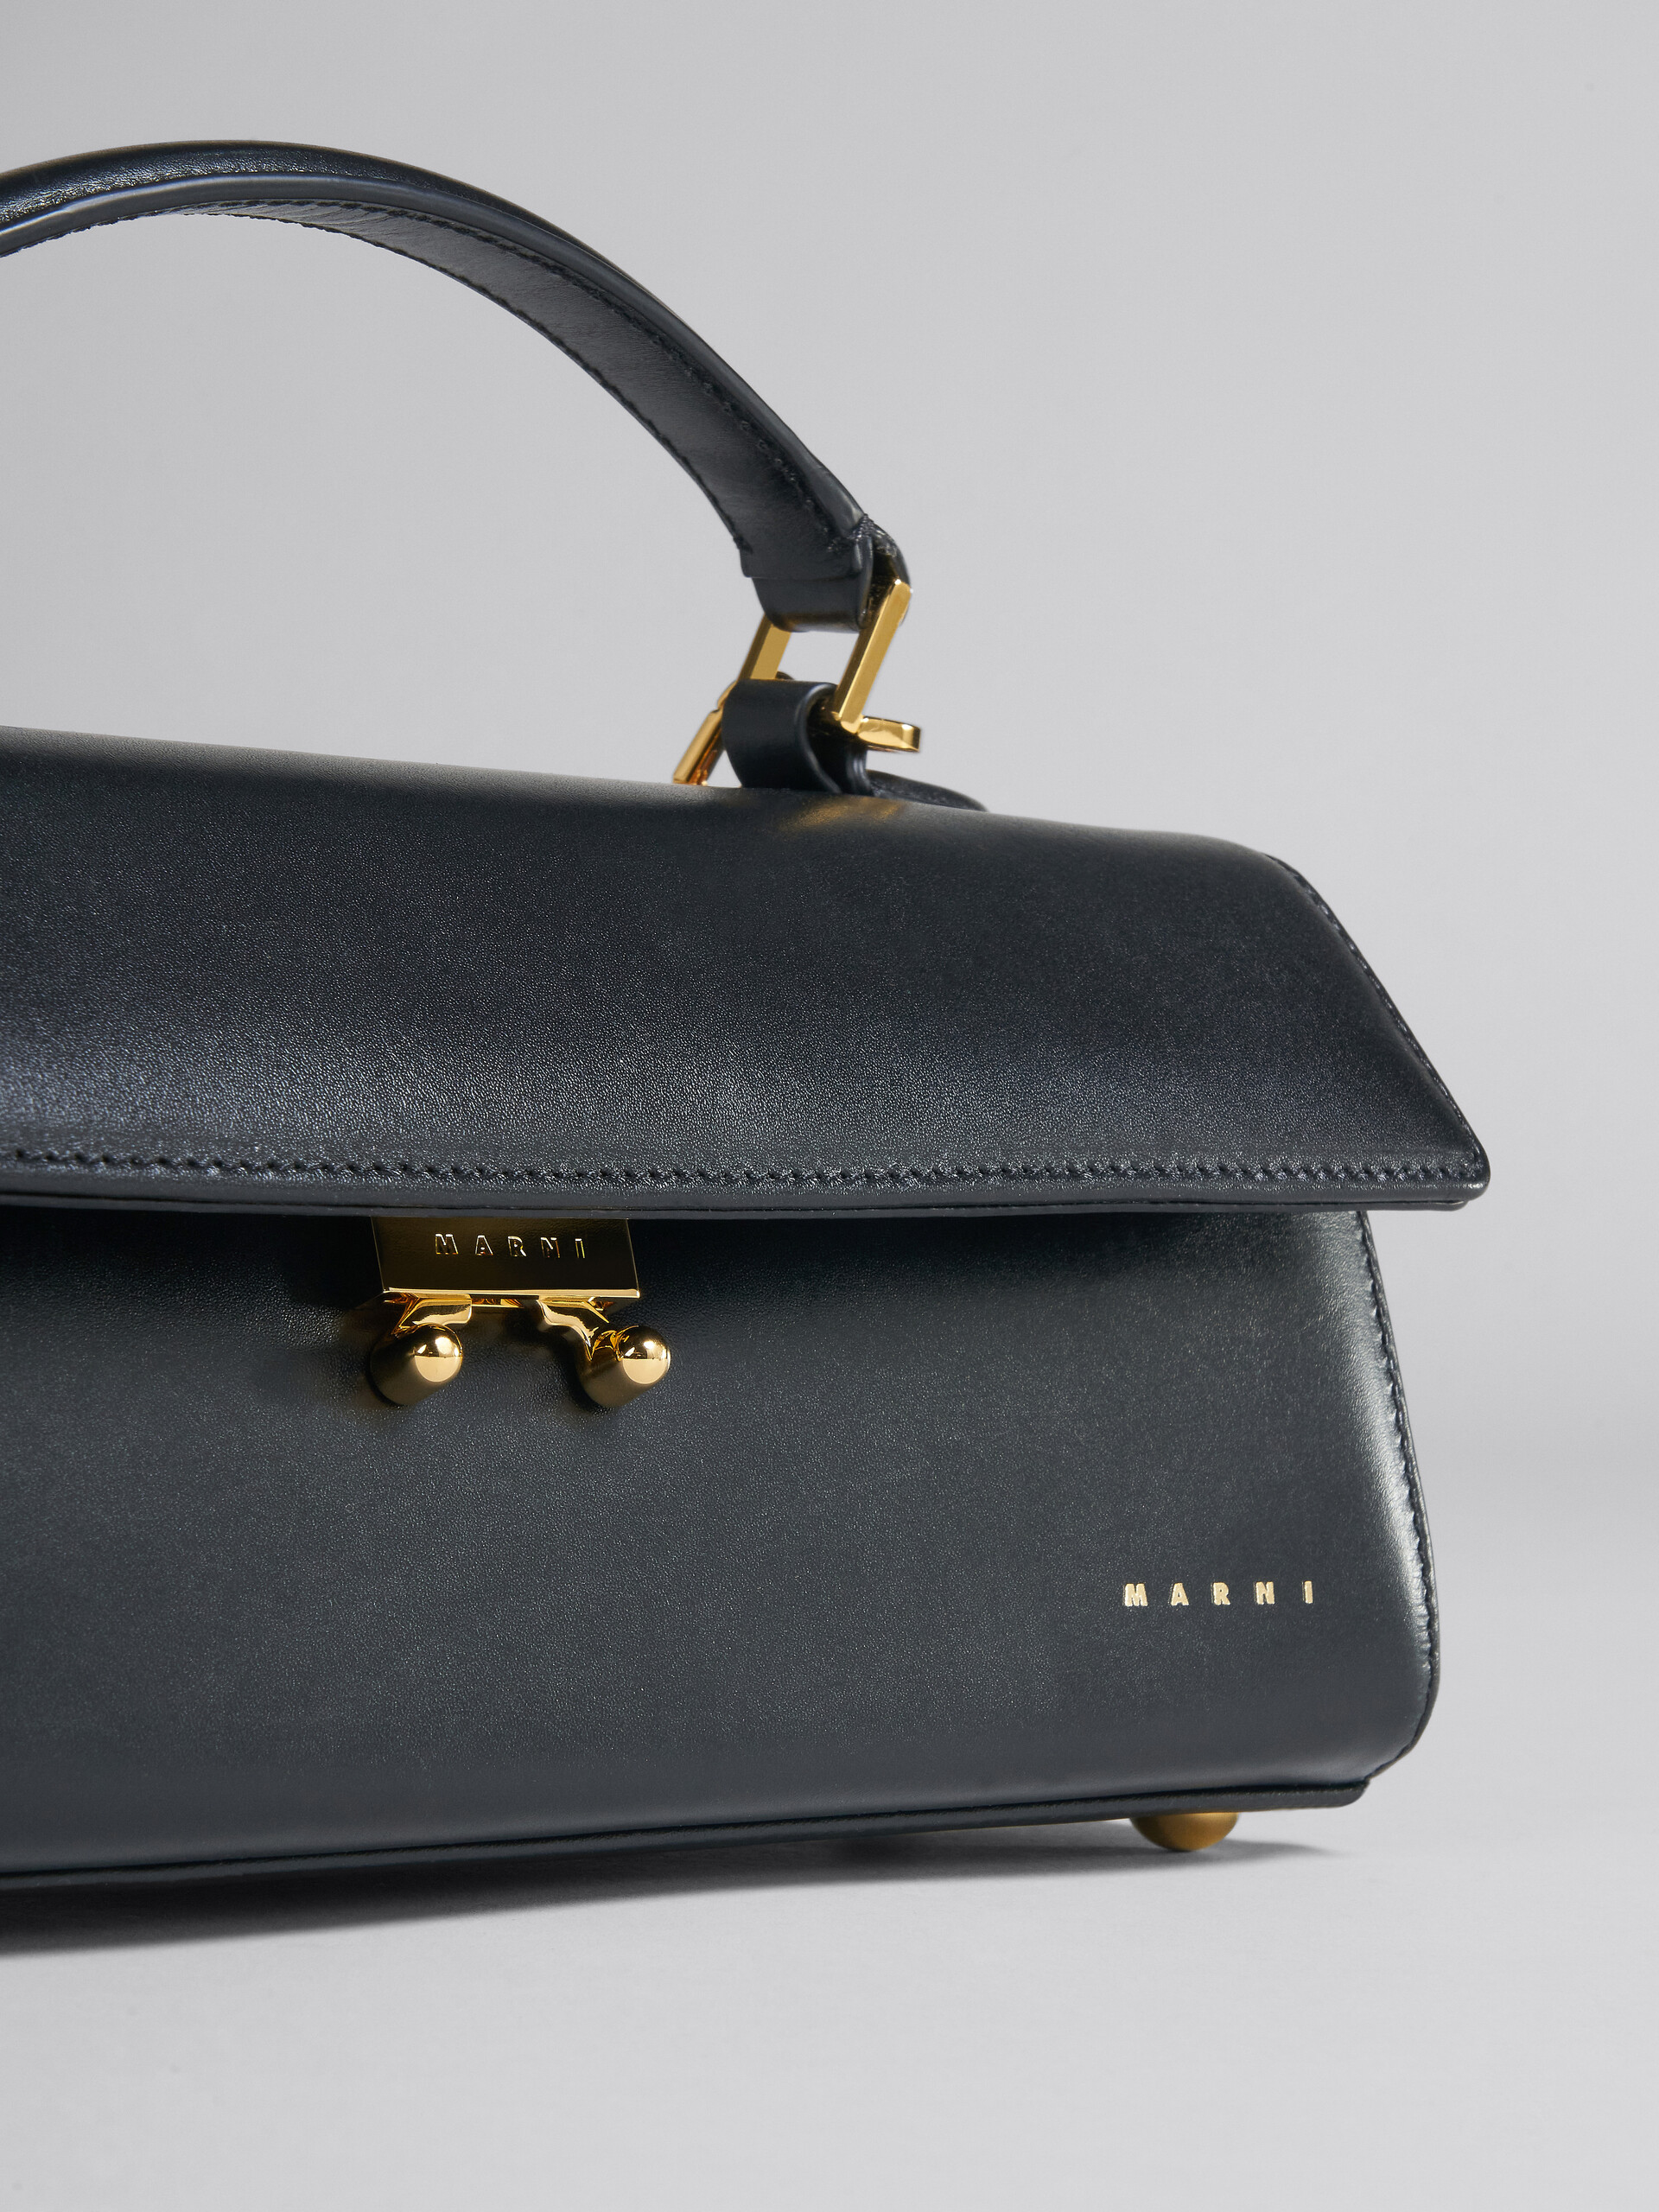 Relativity Medium Bag in black leather - Handbags - Image 5